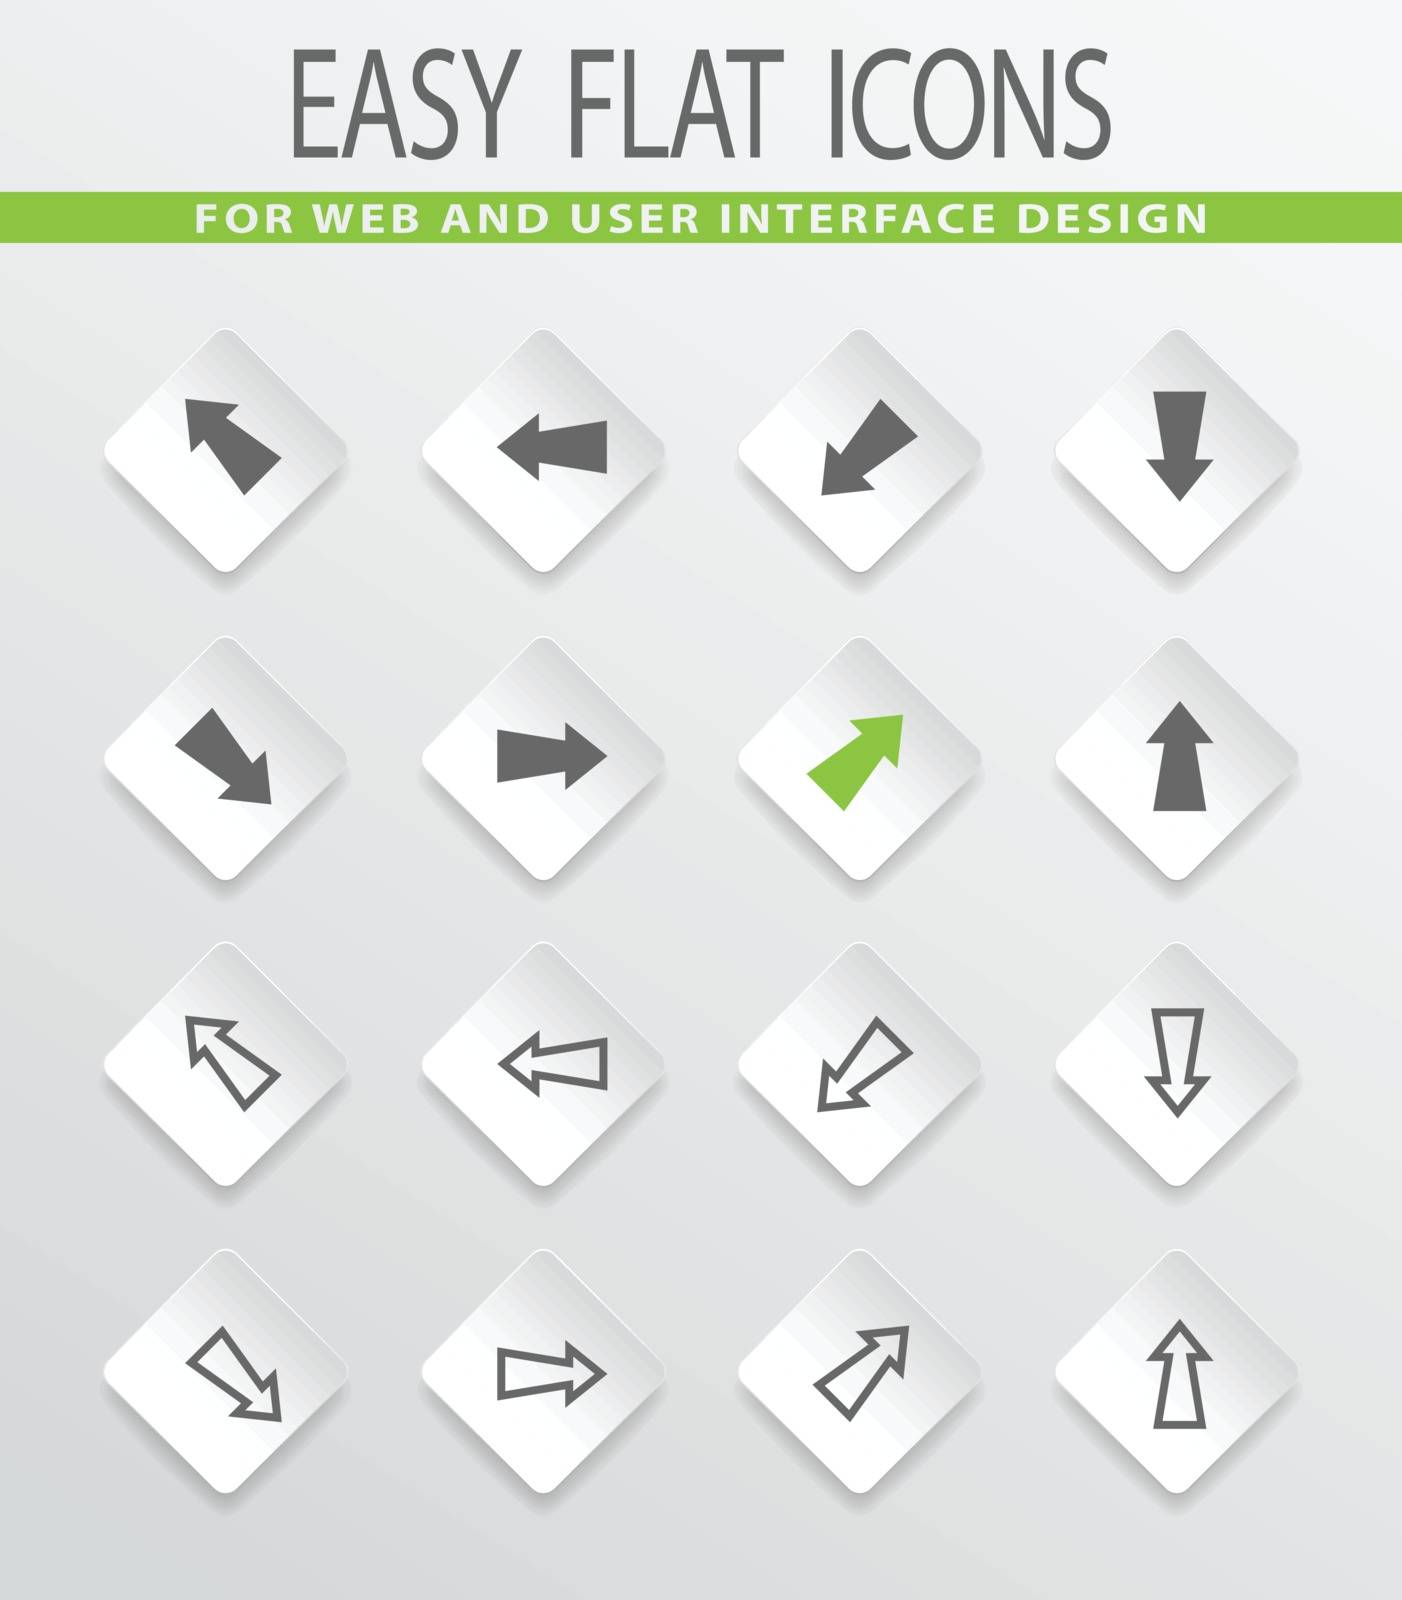 Arrows vector icons for user interface design